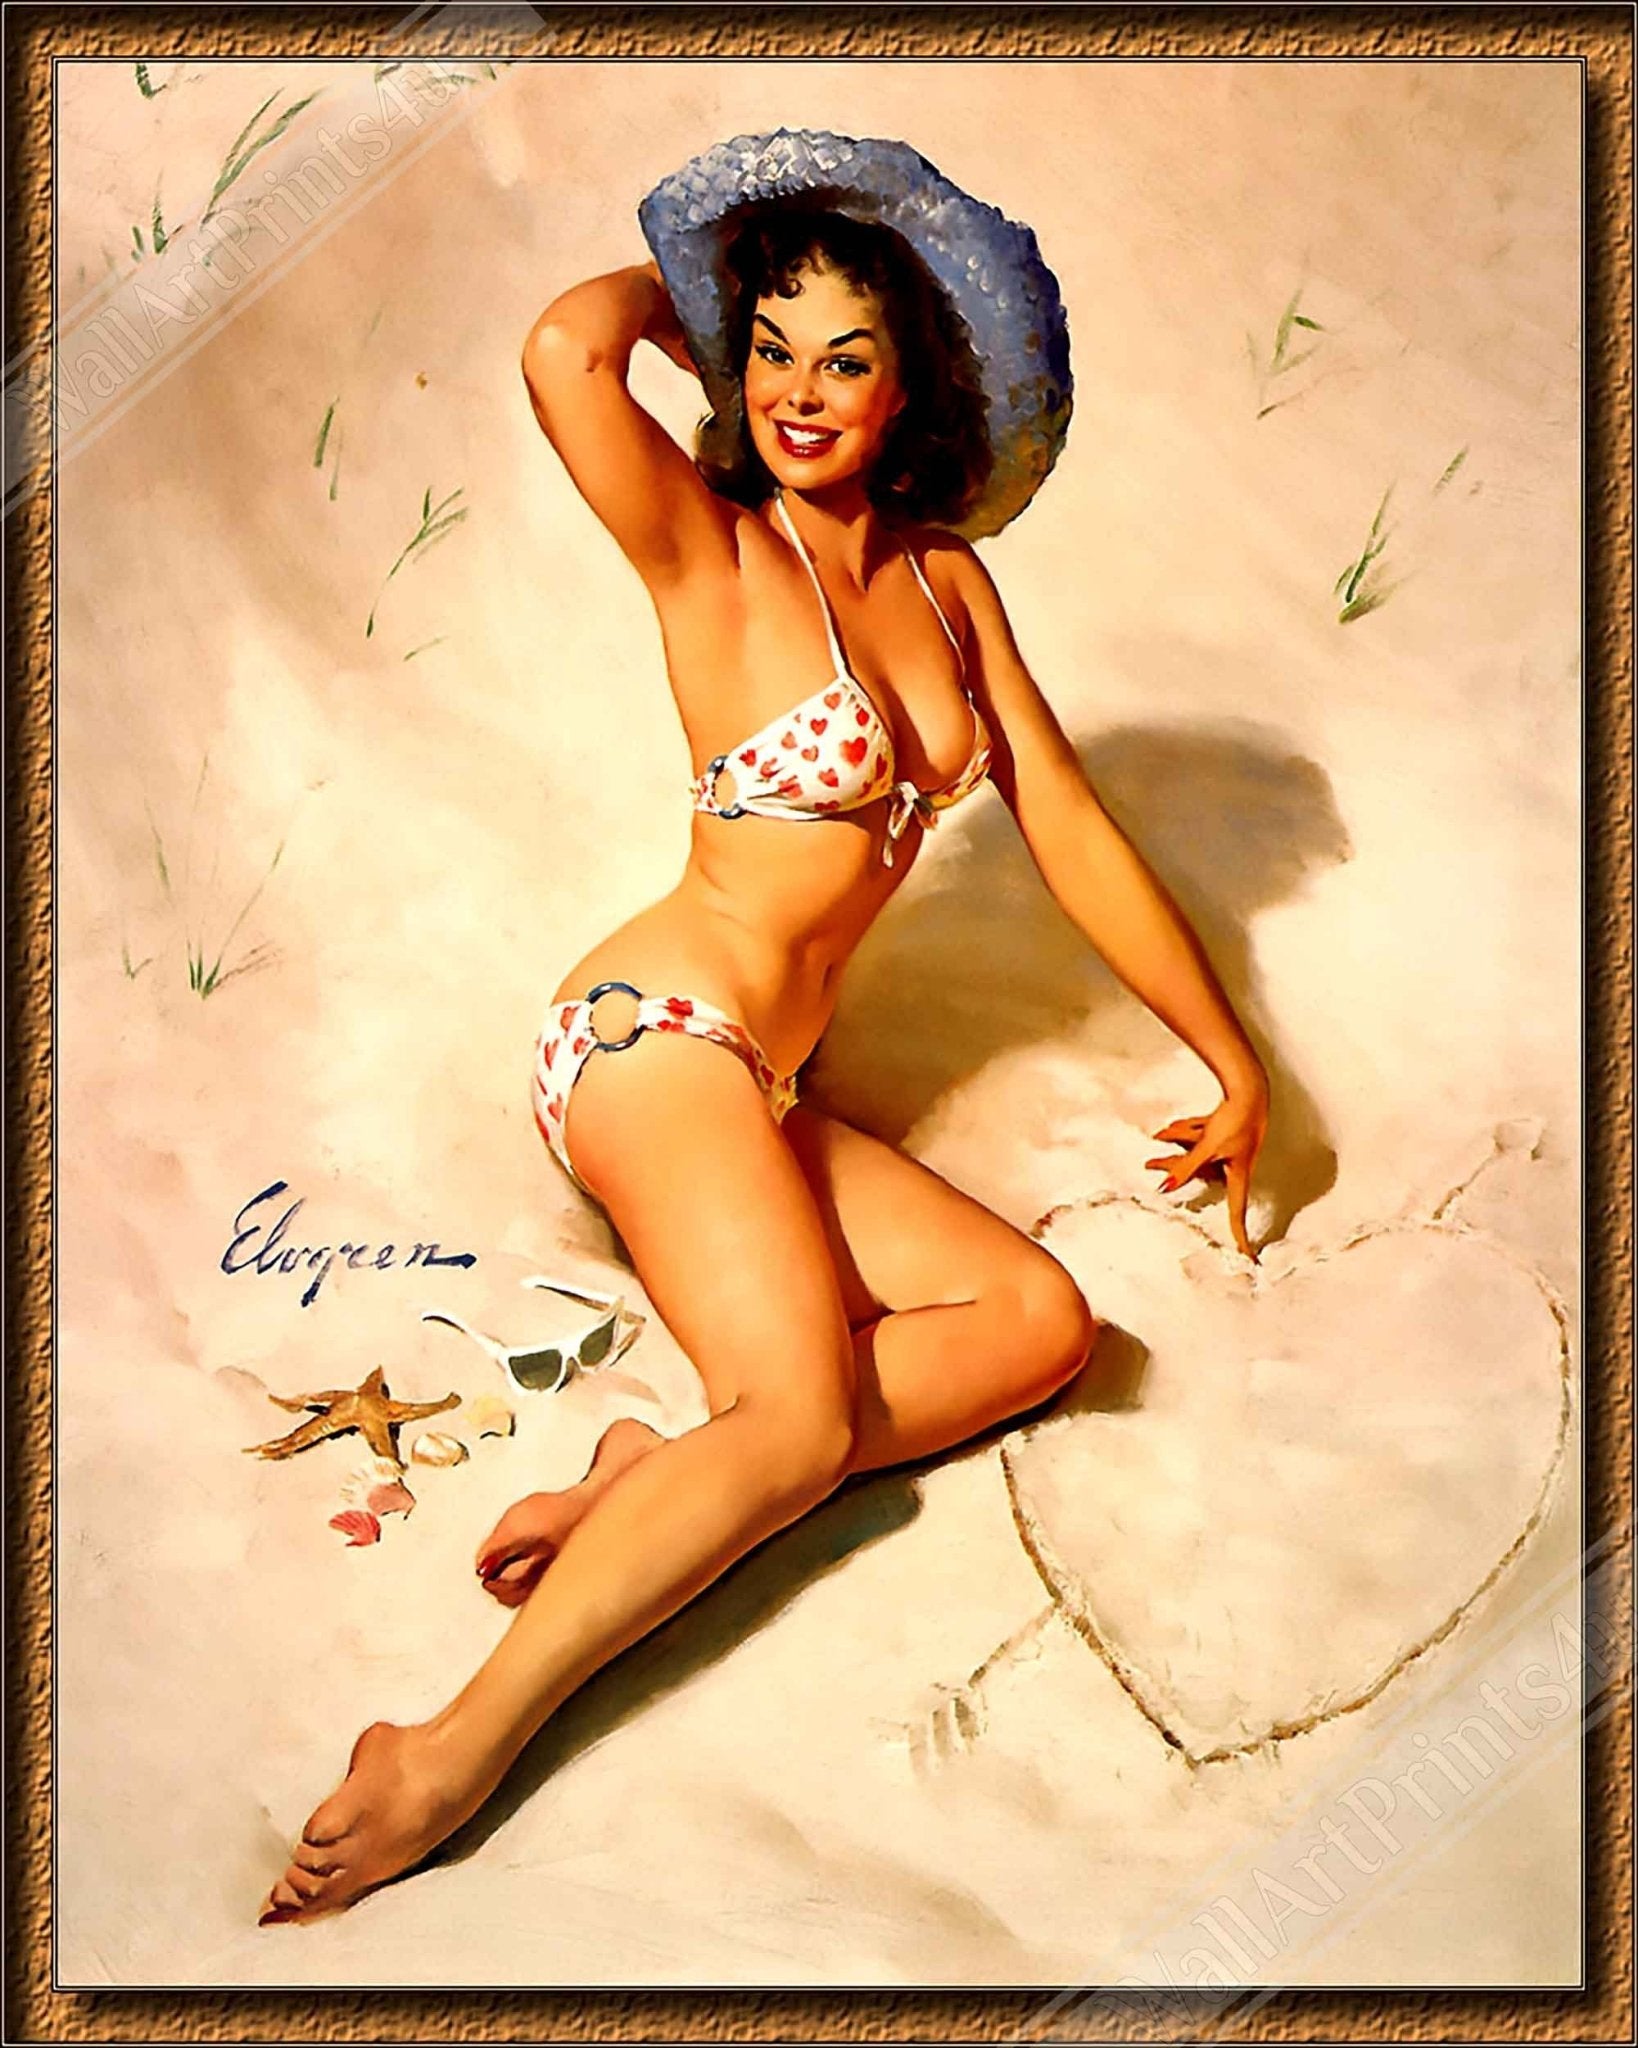 Vintage Pin Up Girl Framed Print, Bikini With Hearts, Gil Elvgren - Vintage Art - Retro Pin Up Girl Framed - Late 1940's - 1950's - WallArtPrints4U